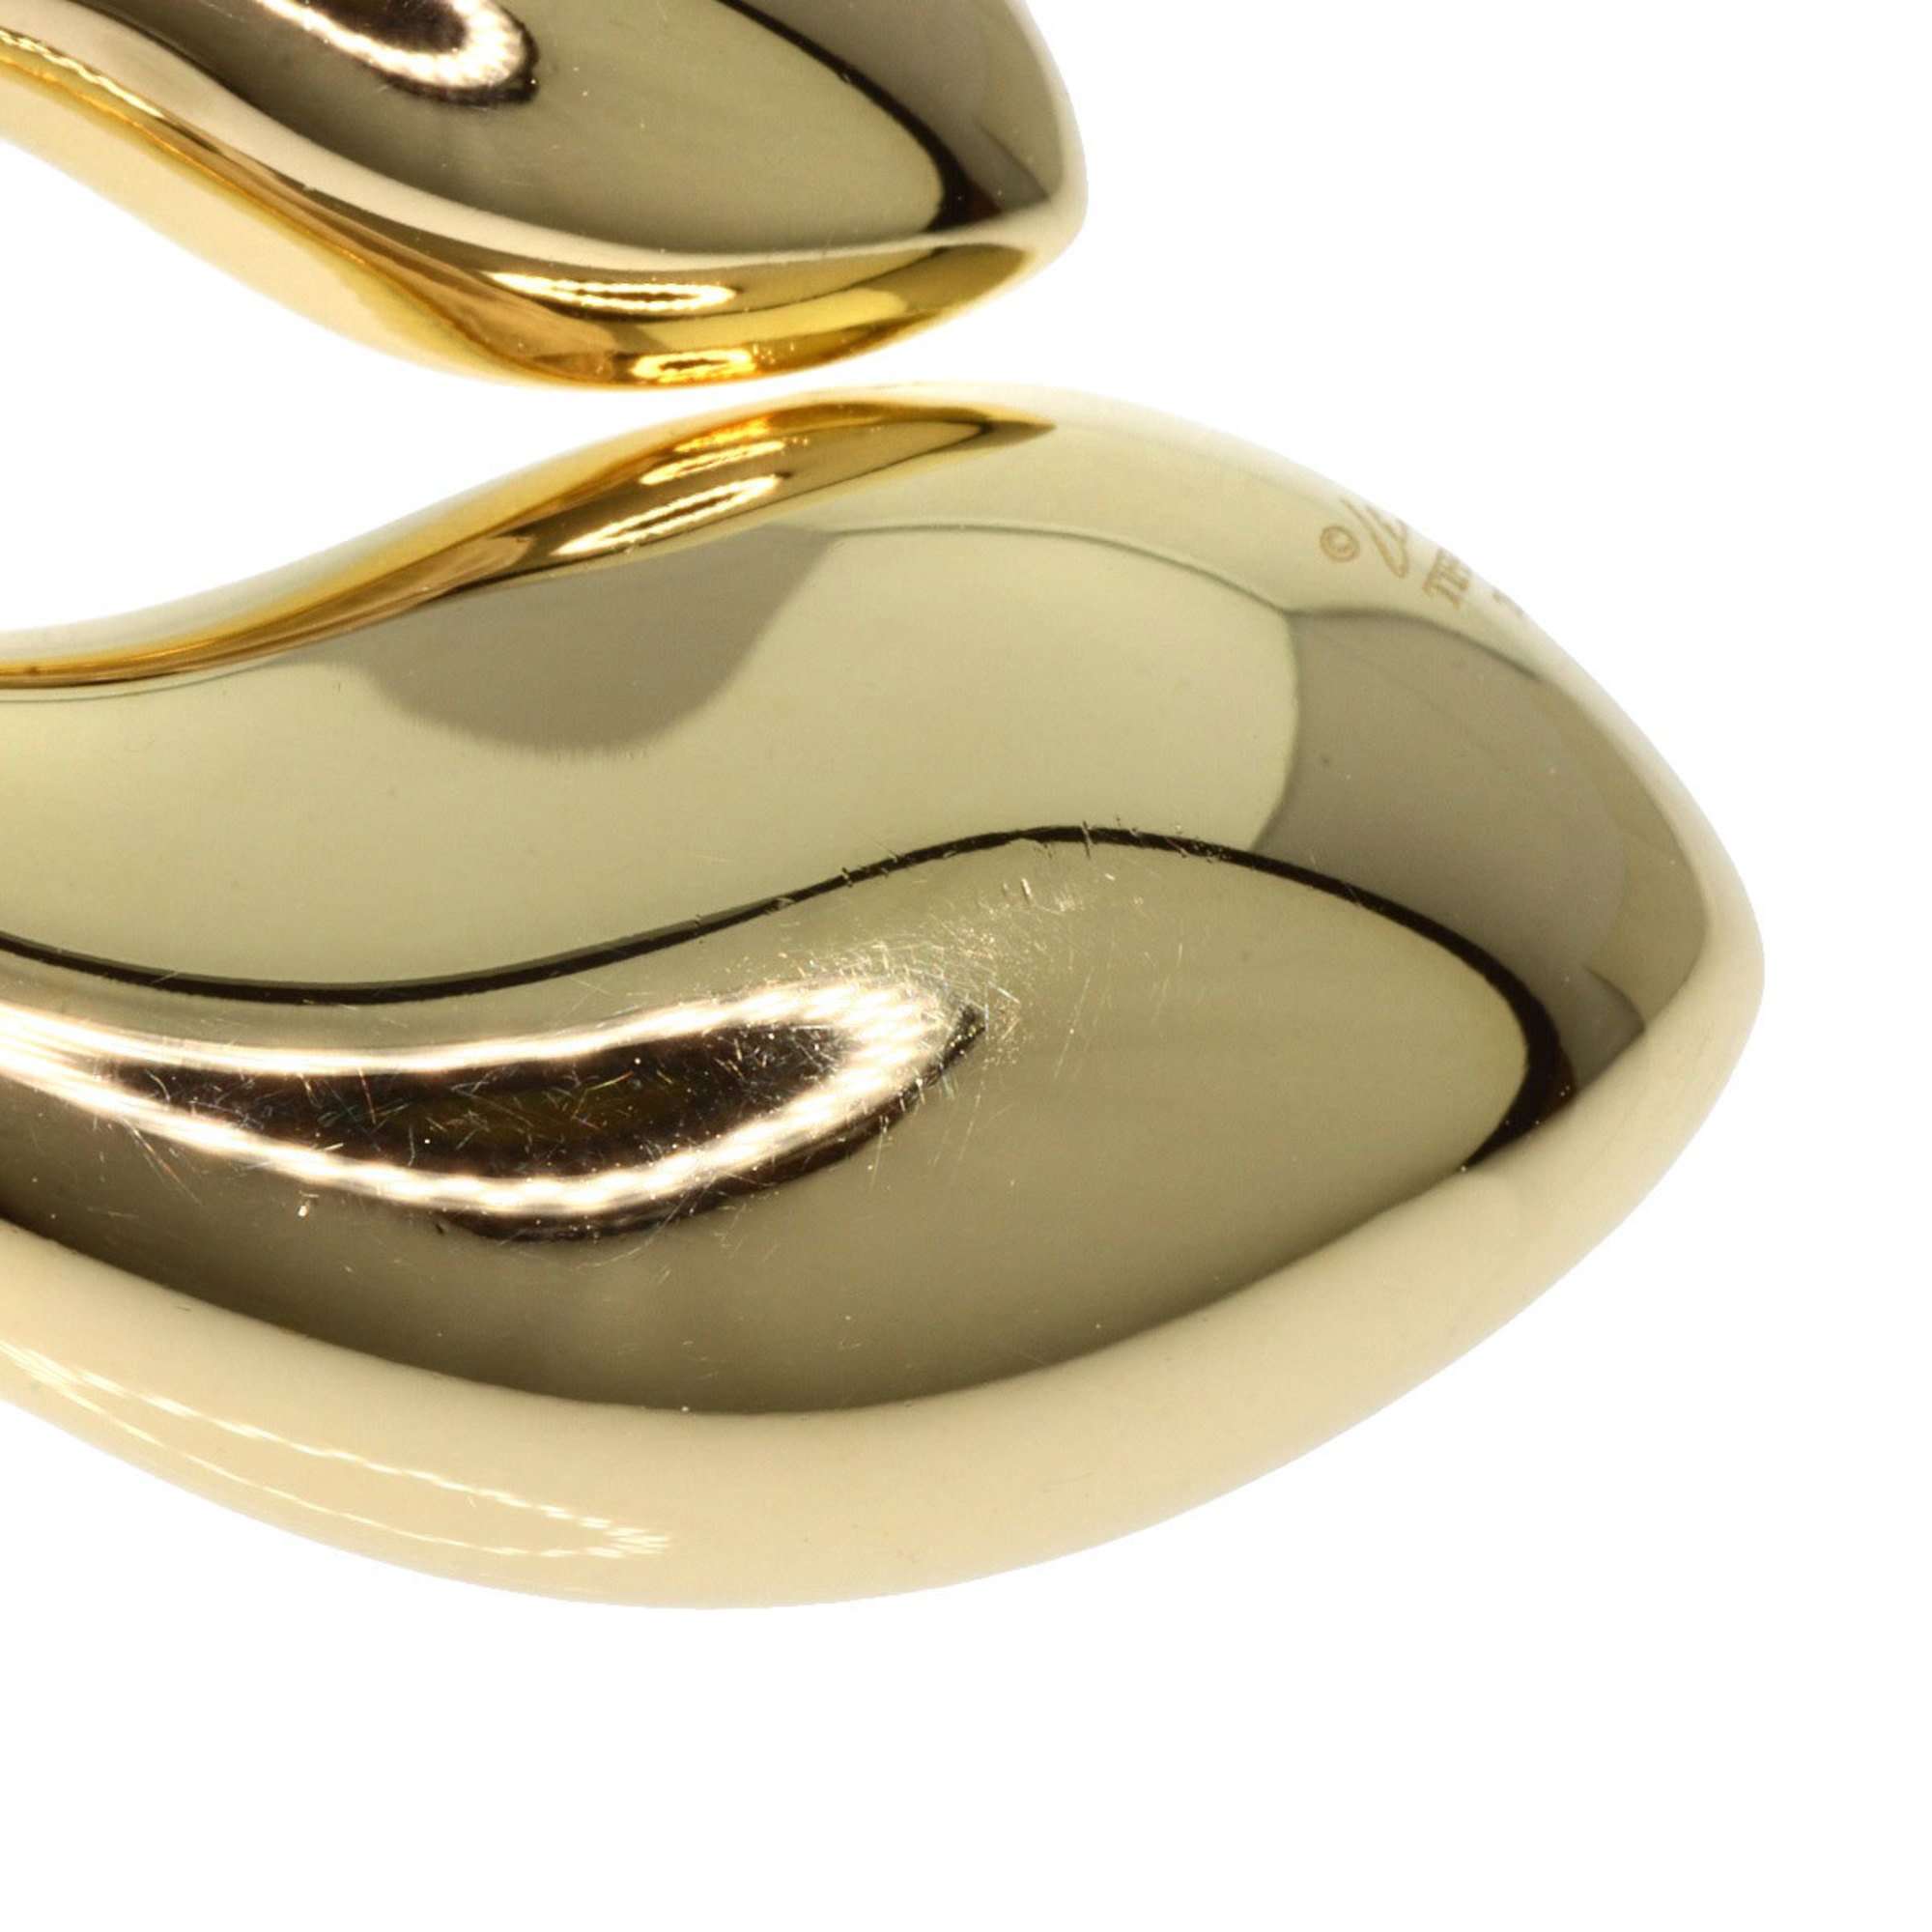 Tiffany & Co. Double Teardrop Necklace, 18K Yellow Gold, Women's, TIFFANY